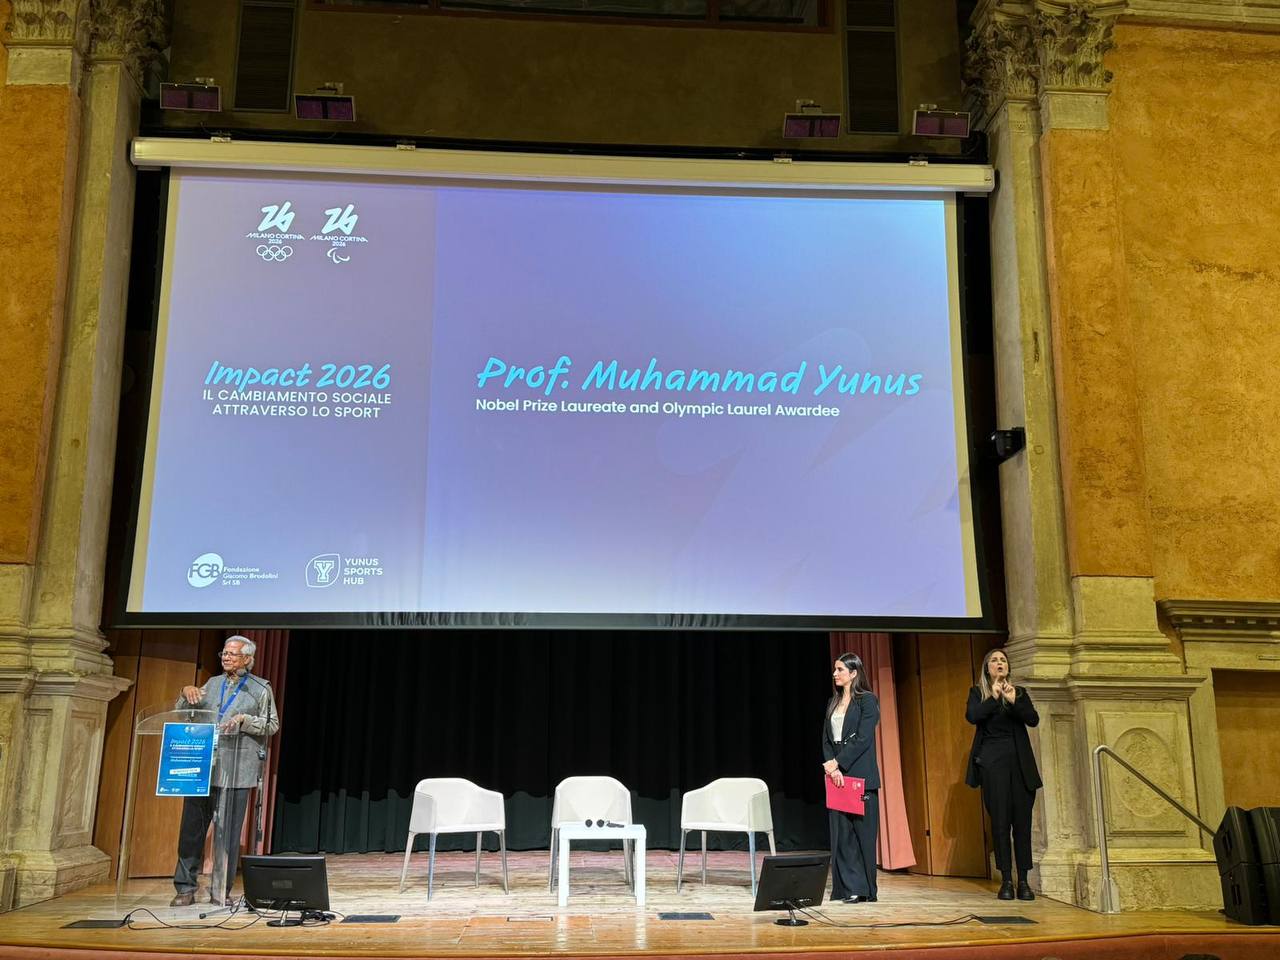 Photo by Prof. Muhammad Yunus at the Santa Margherita Auditorium of Ca' Foscari University in Venice